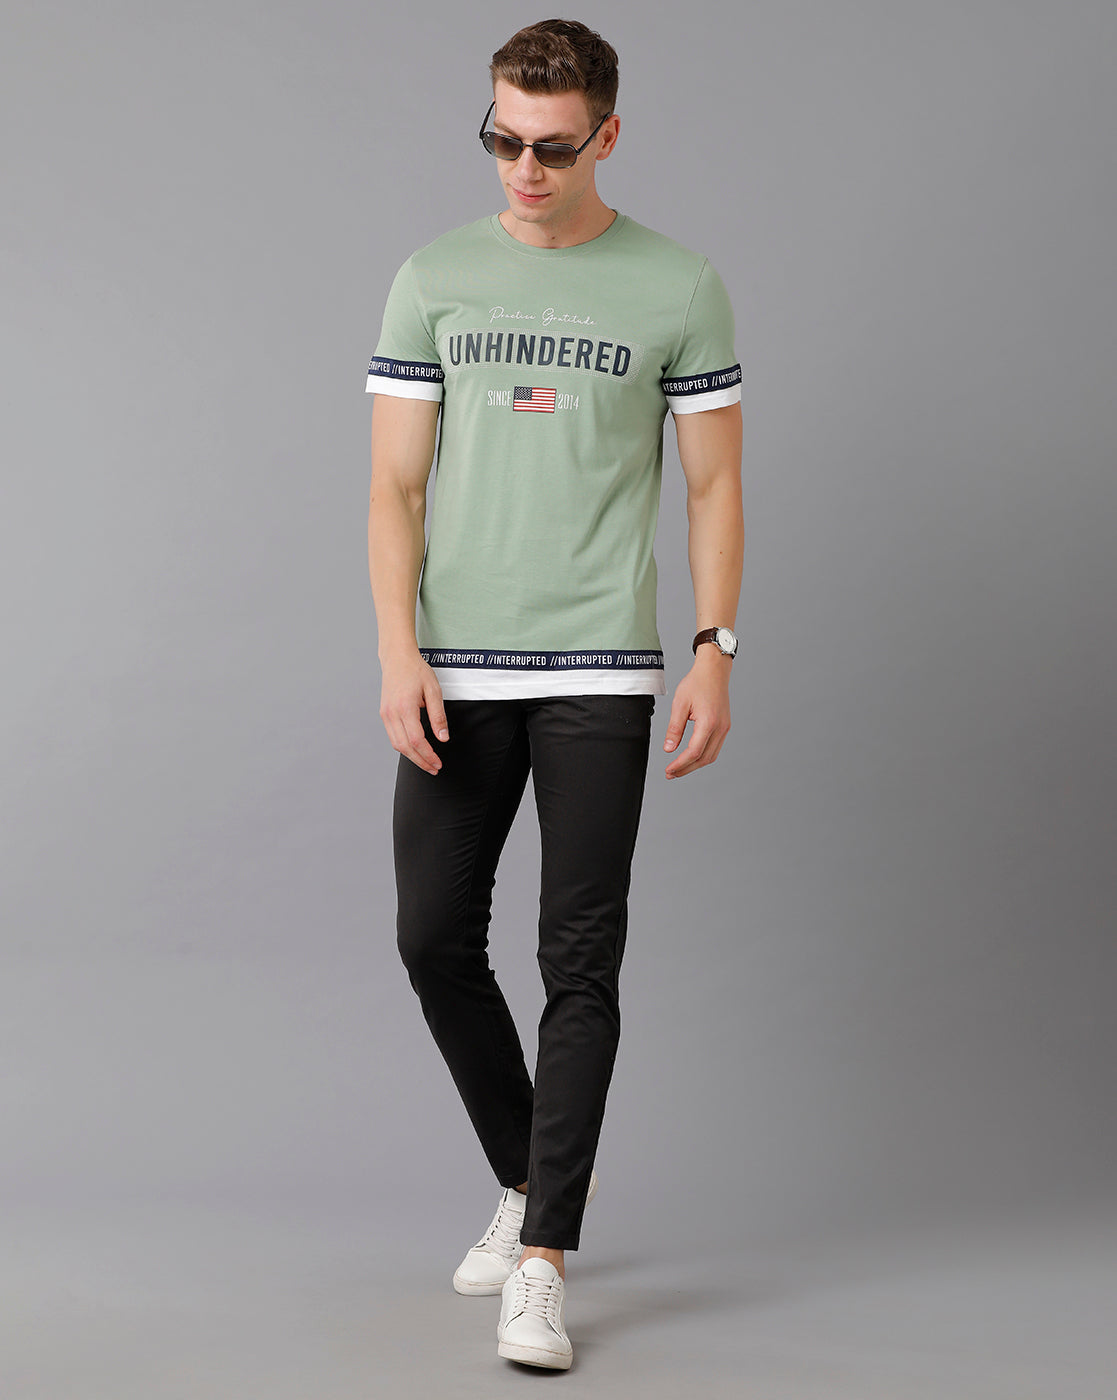 CP BRO Men's Cotton Printed Slim Fit Green T-Shirt | Brcn - 487 B